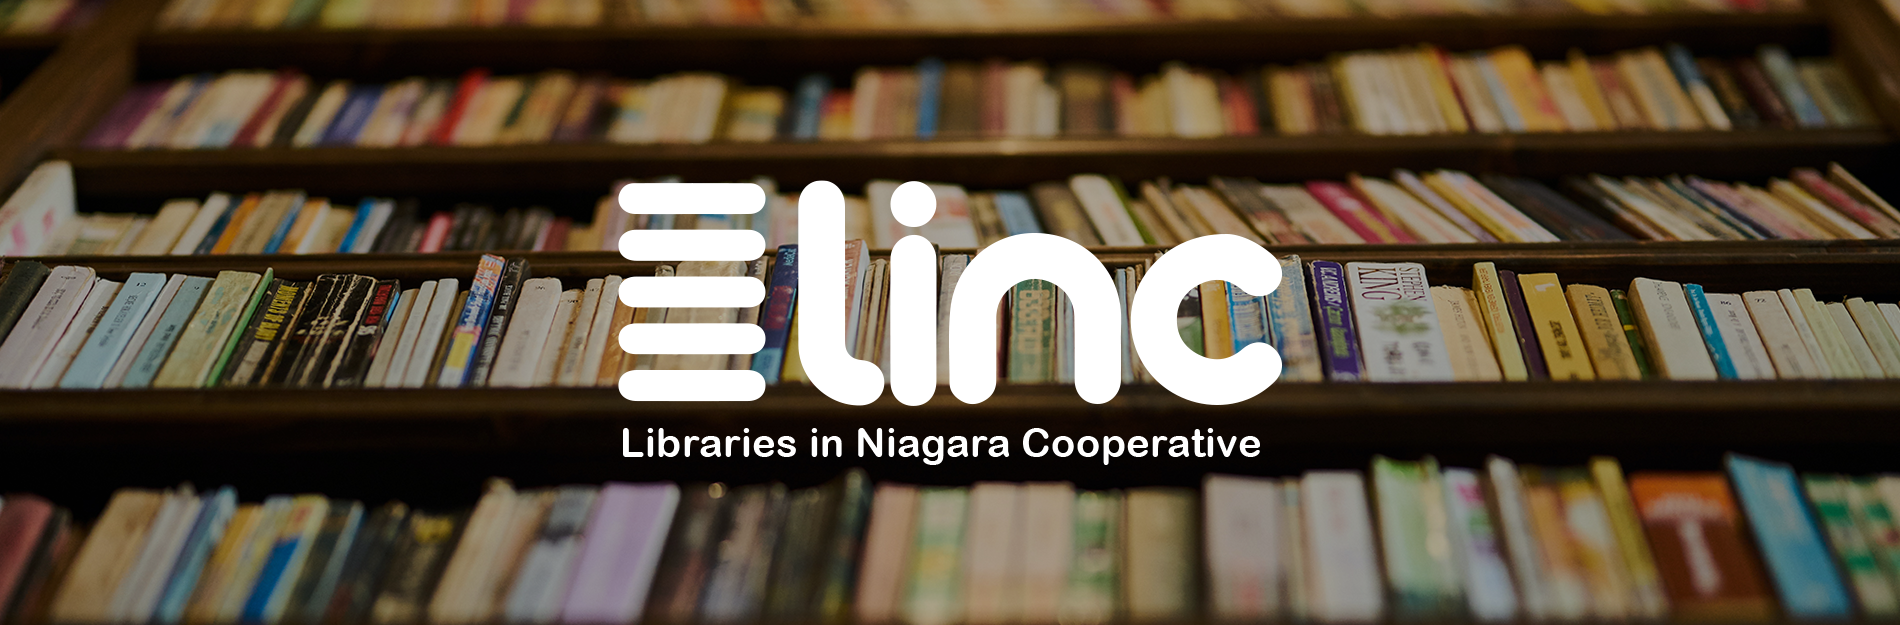 libraries in niagara cooperative